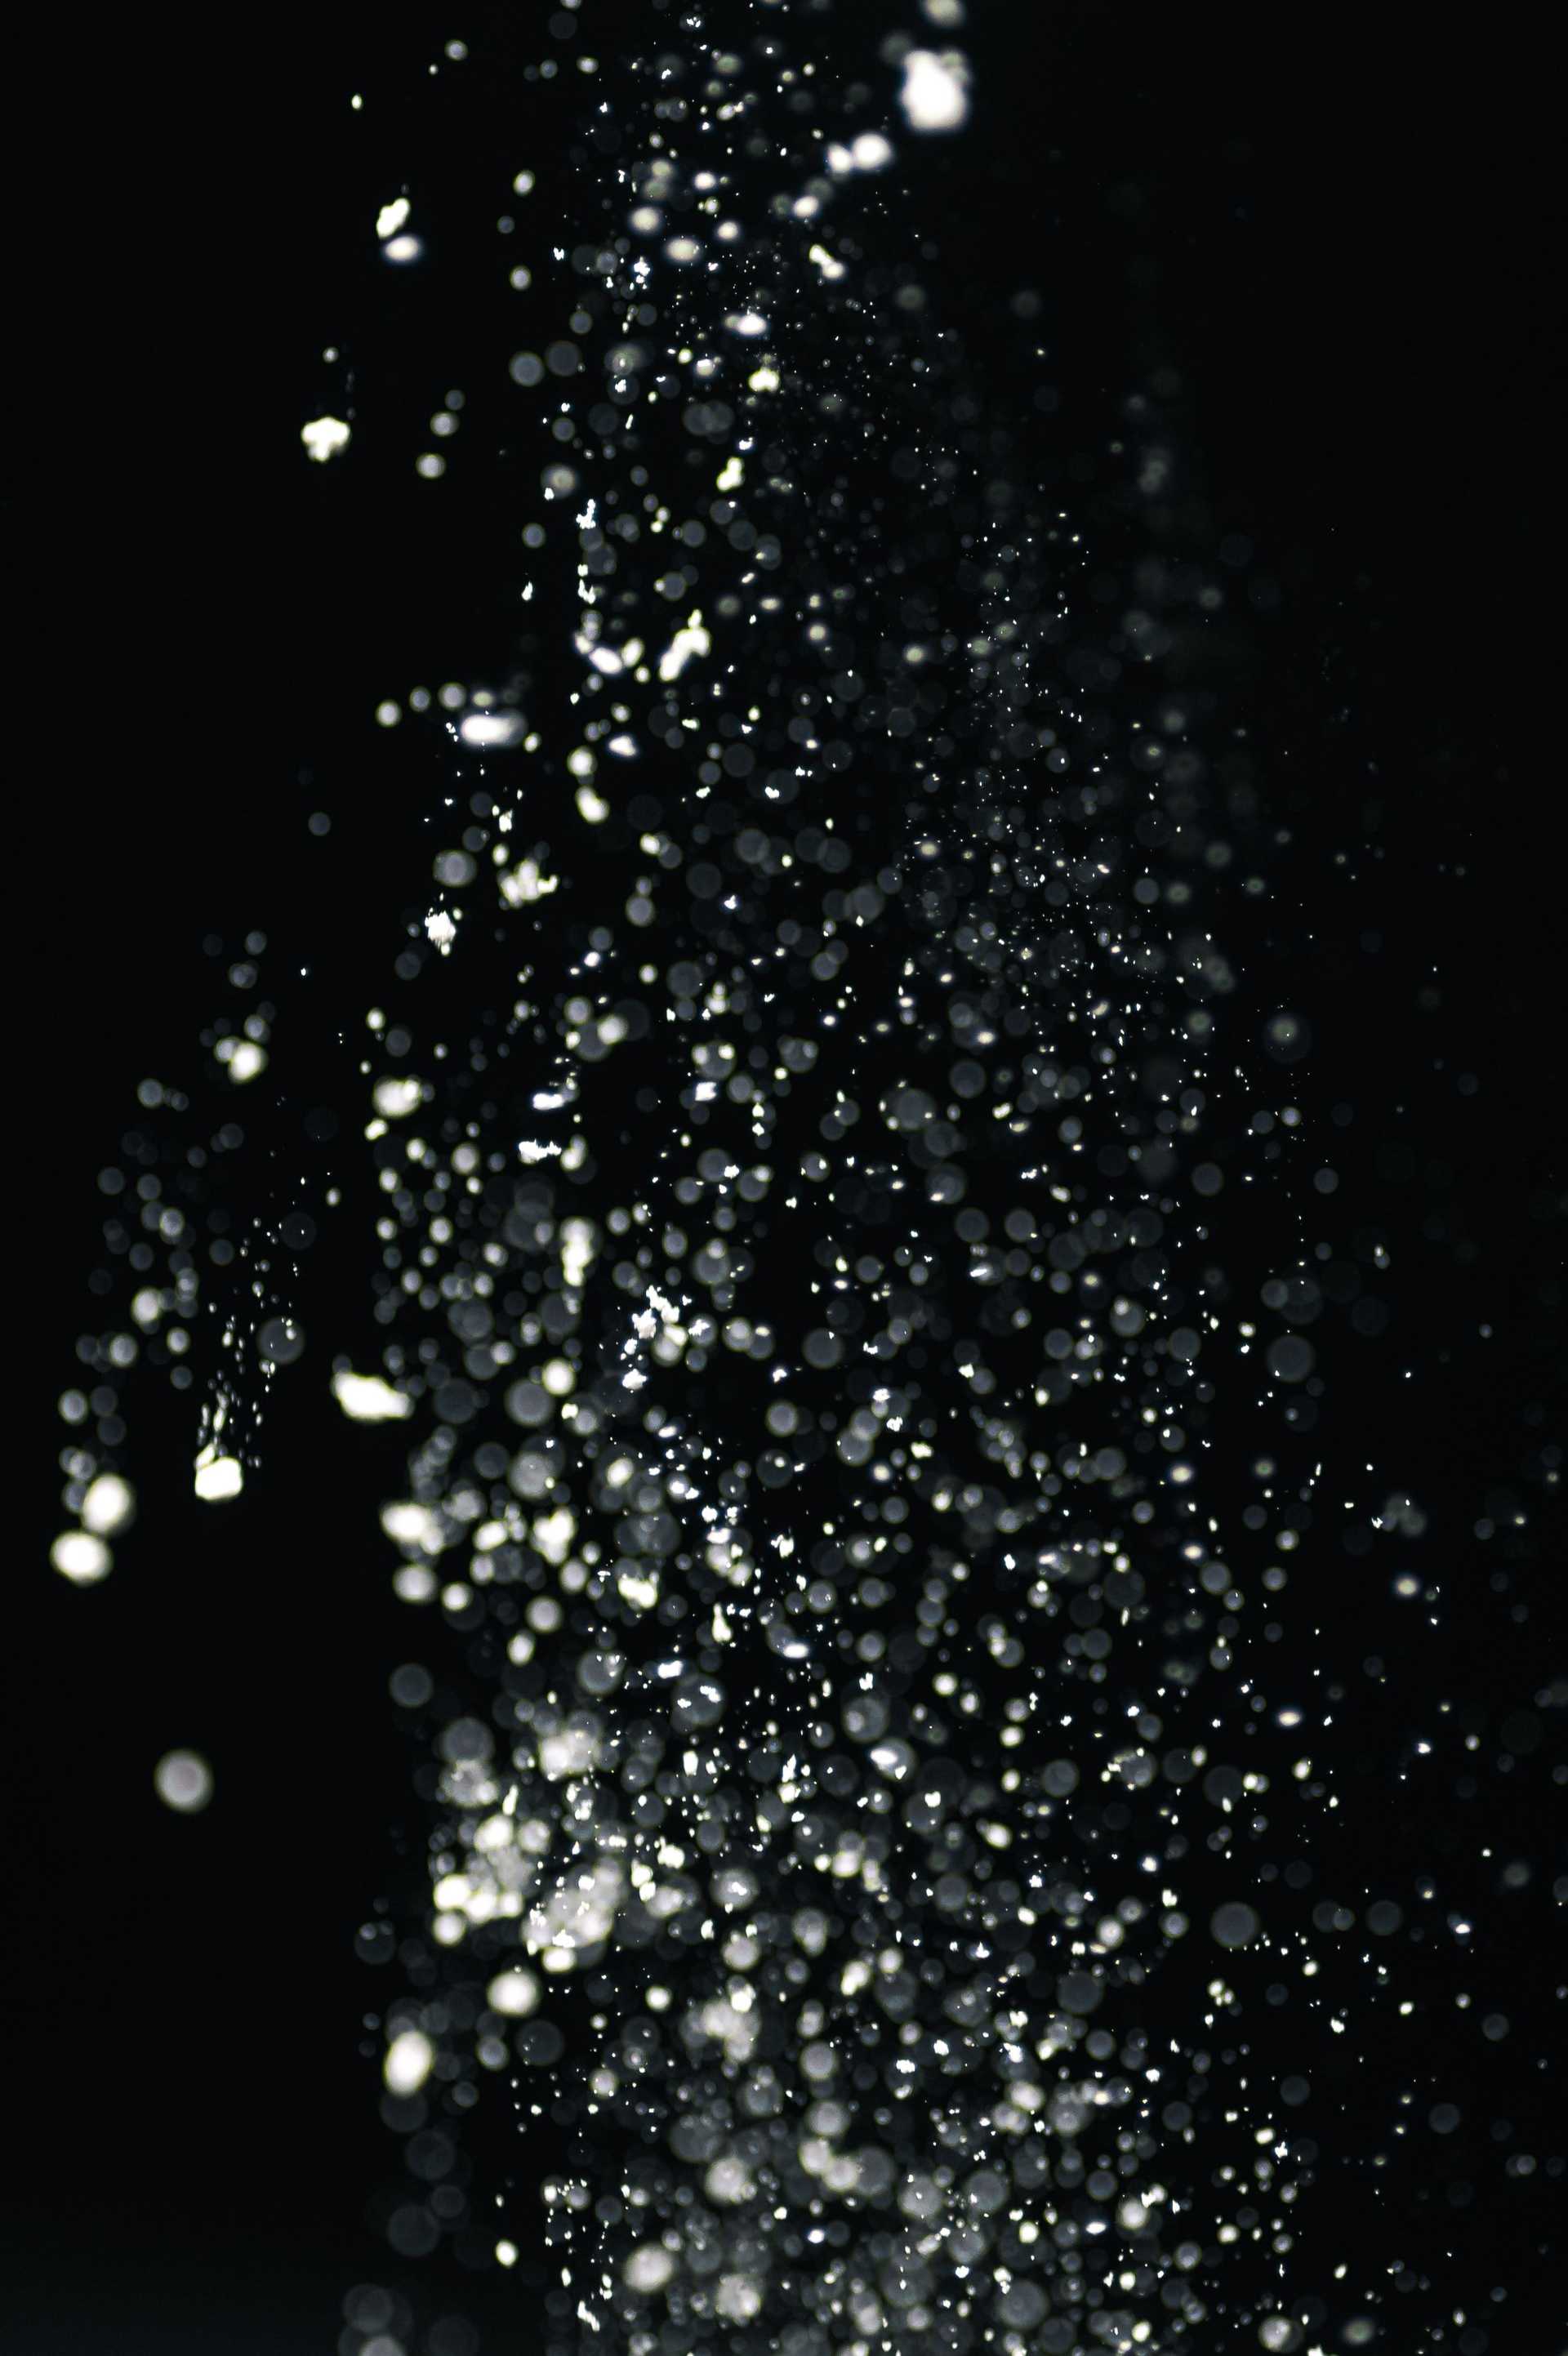 White Powder falling on black background